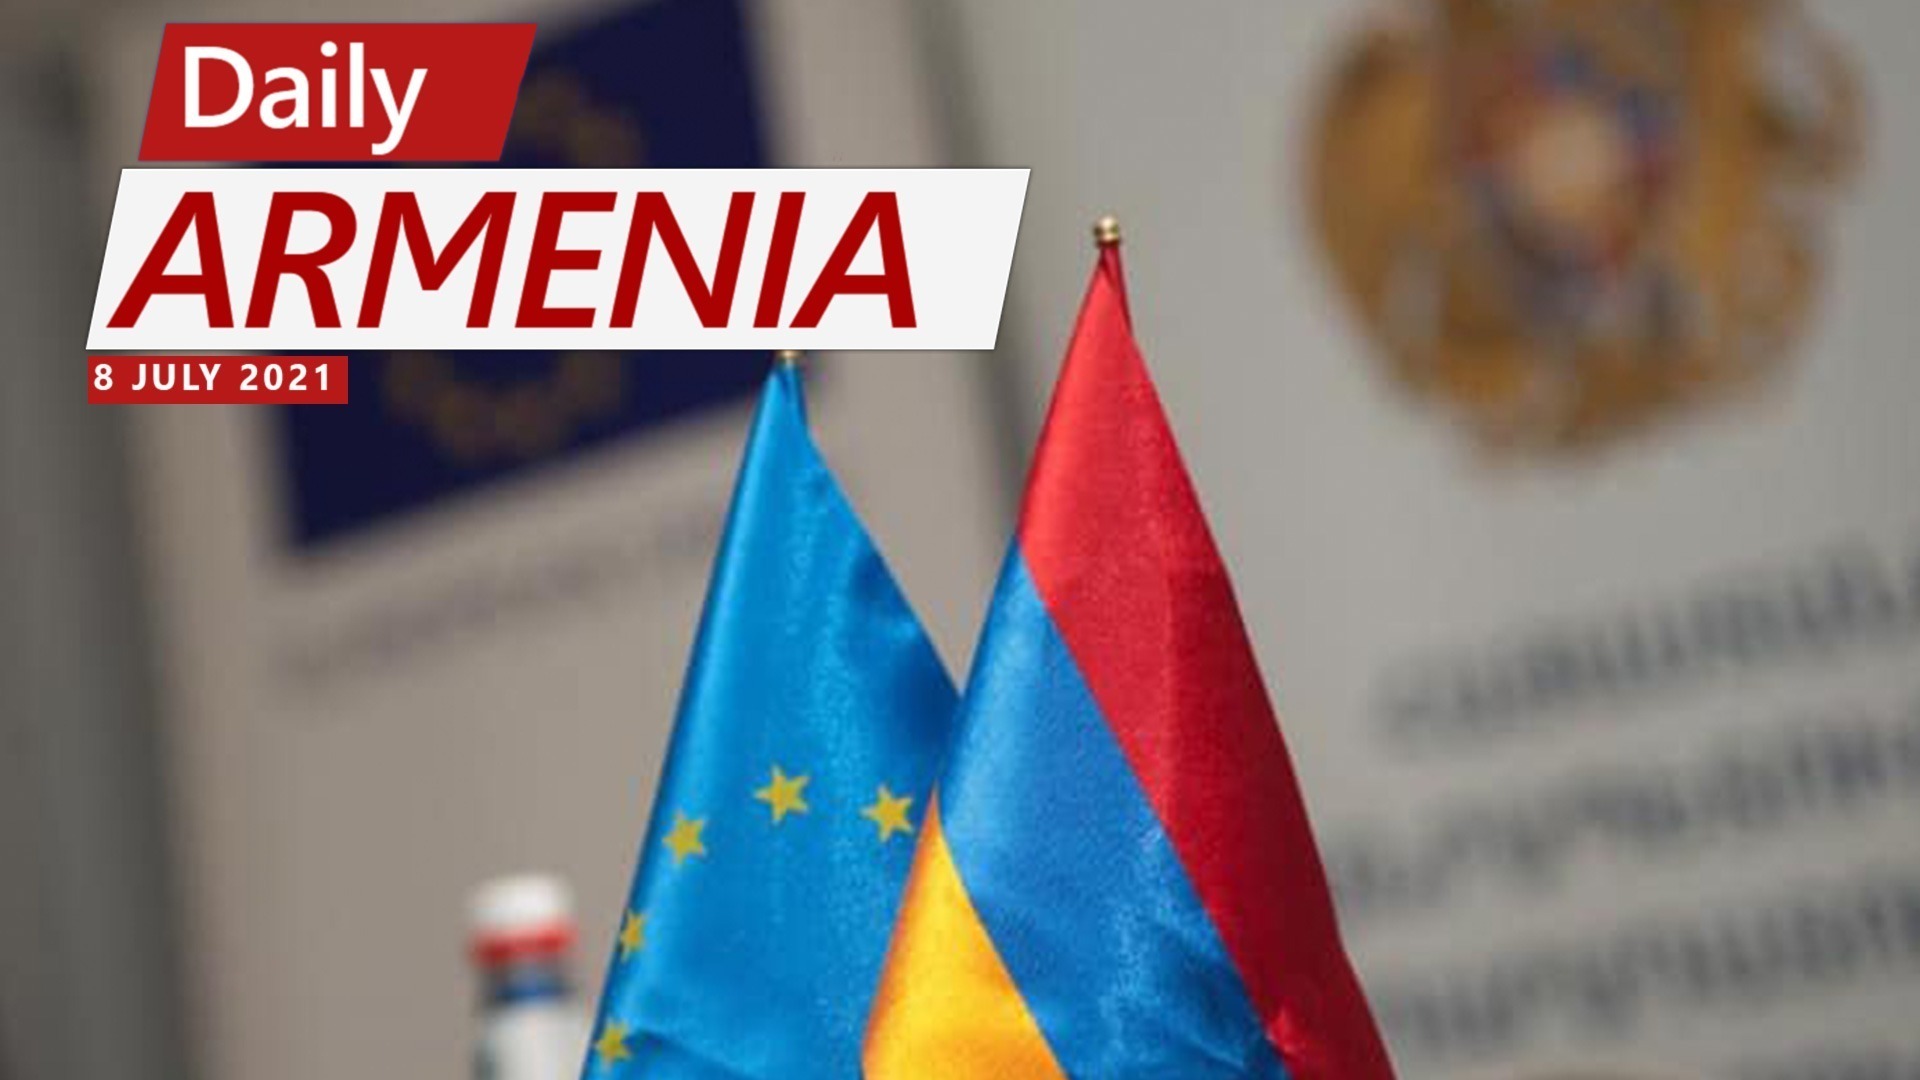 EU fund negotiating investments worth $45 million in Armenia